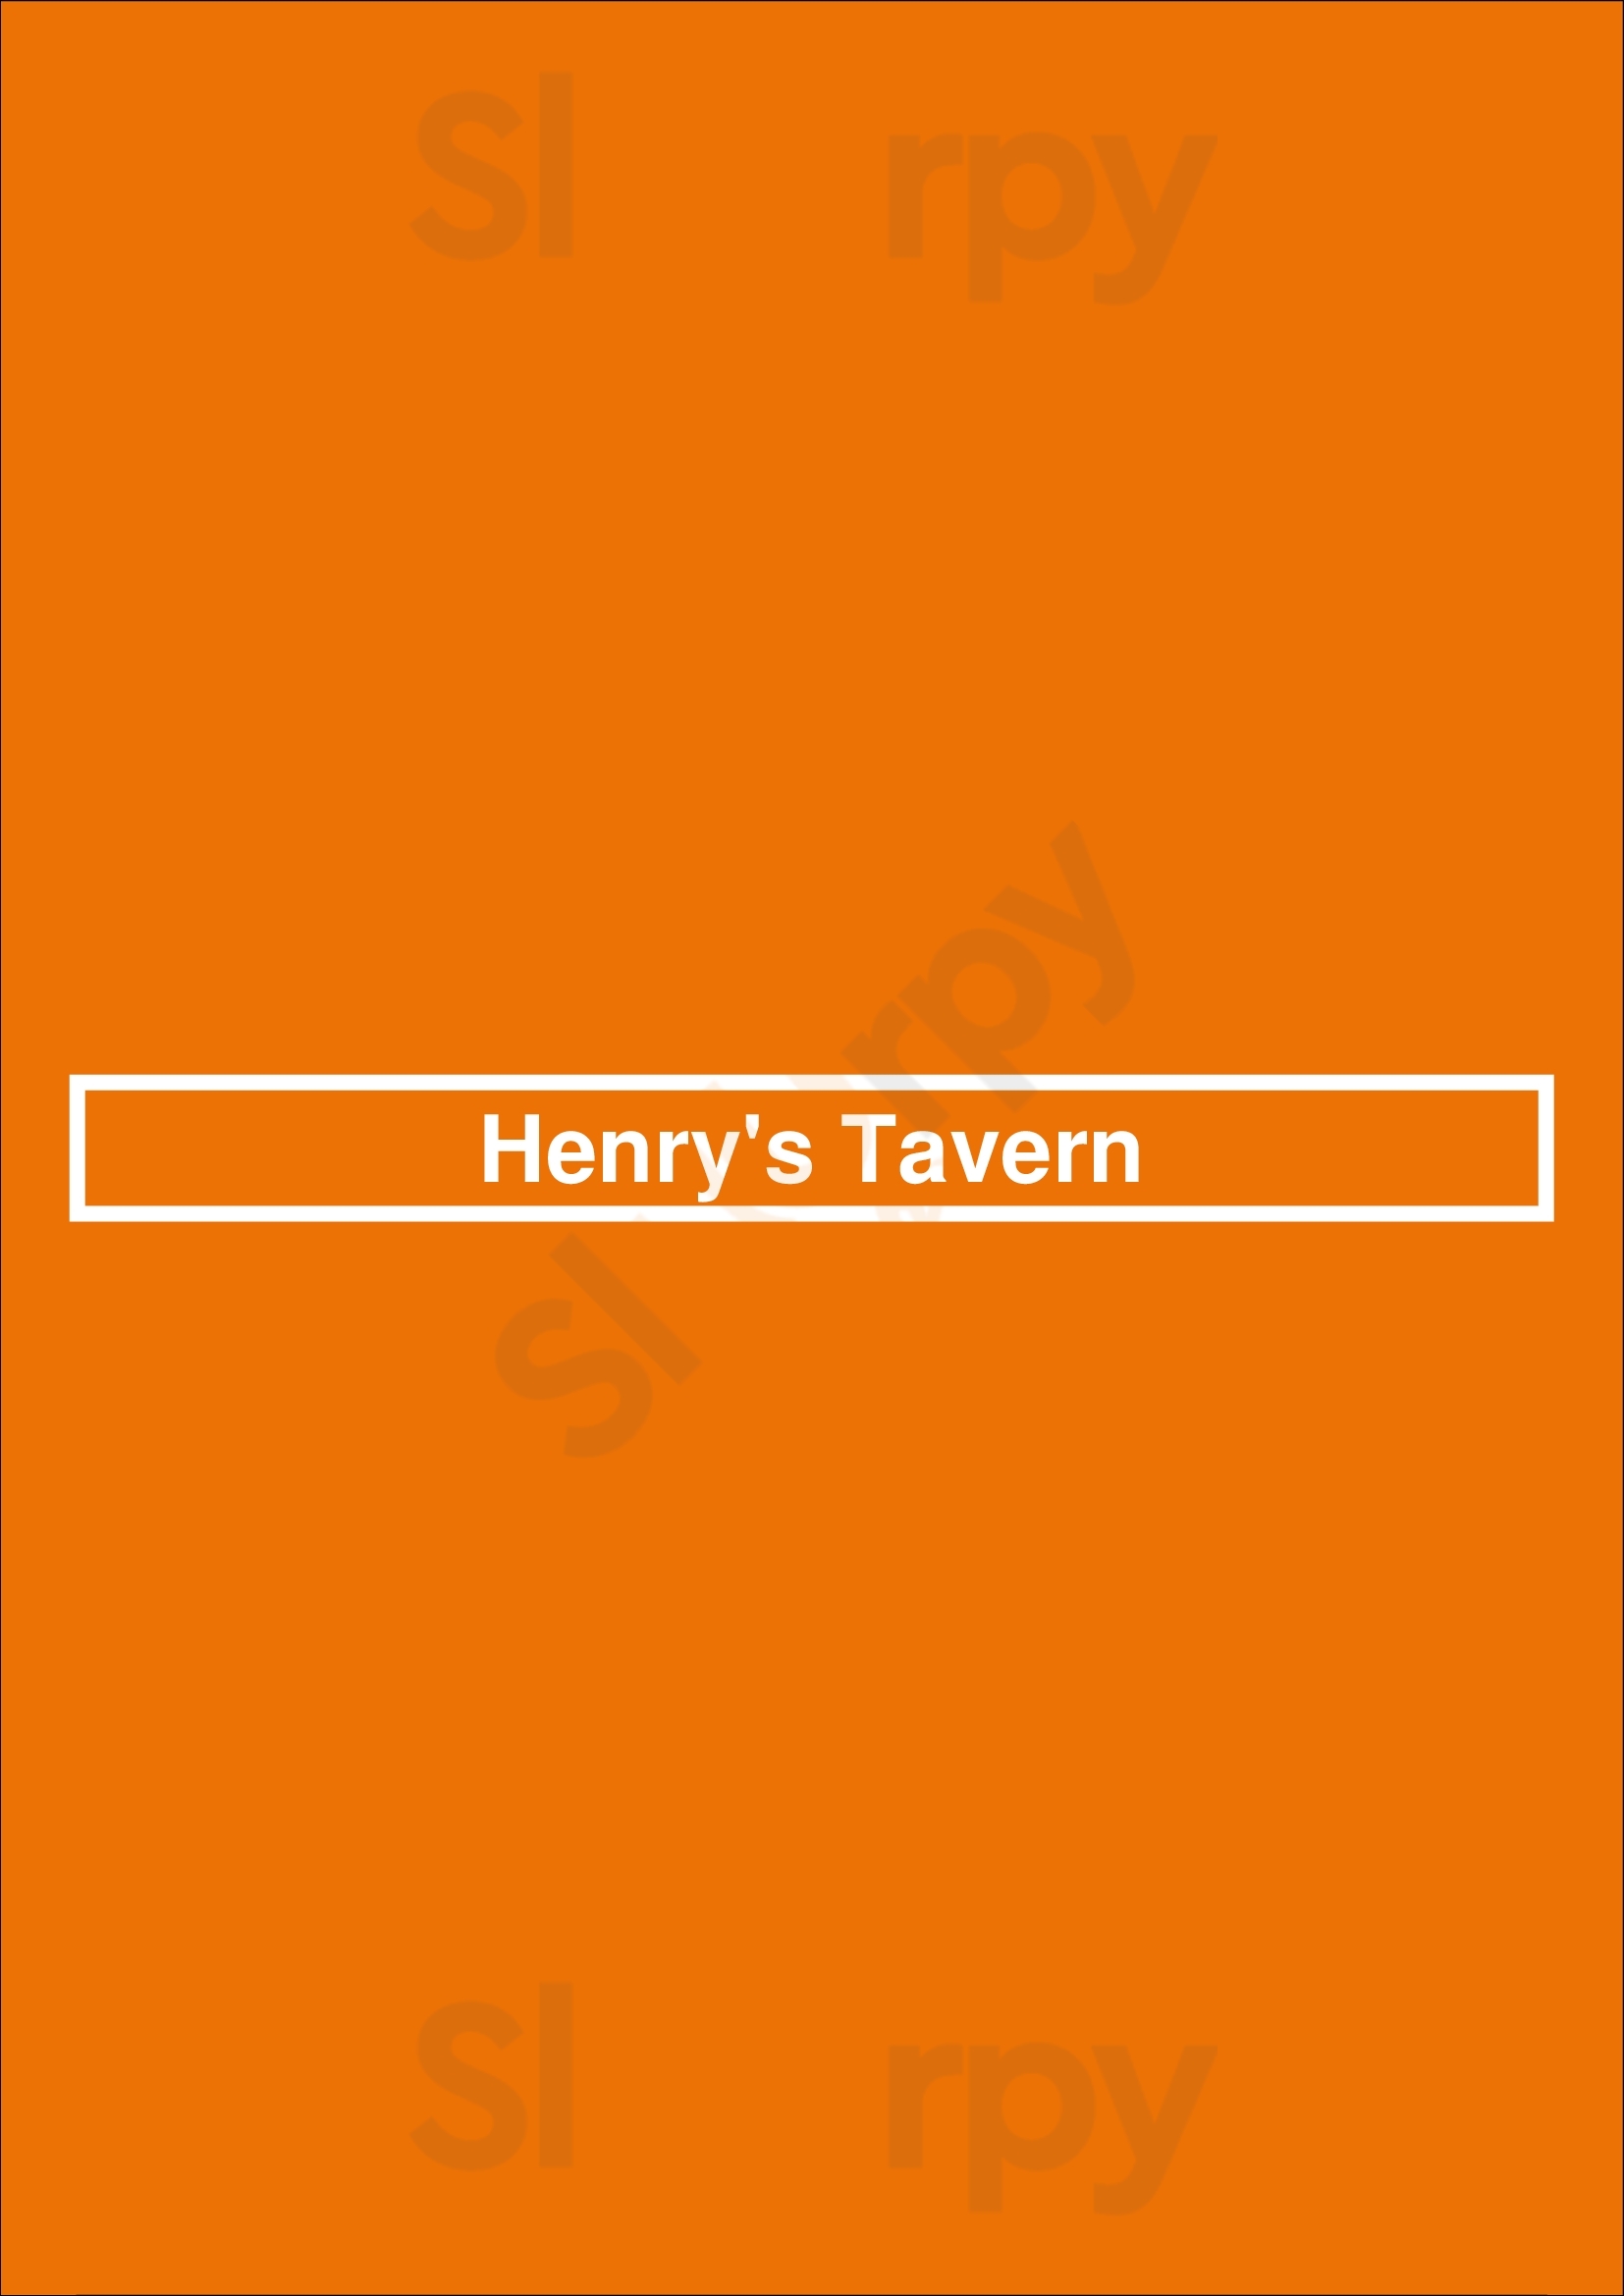 Henry's Tavern Denver Menu - 1